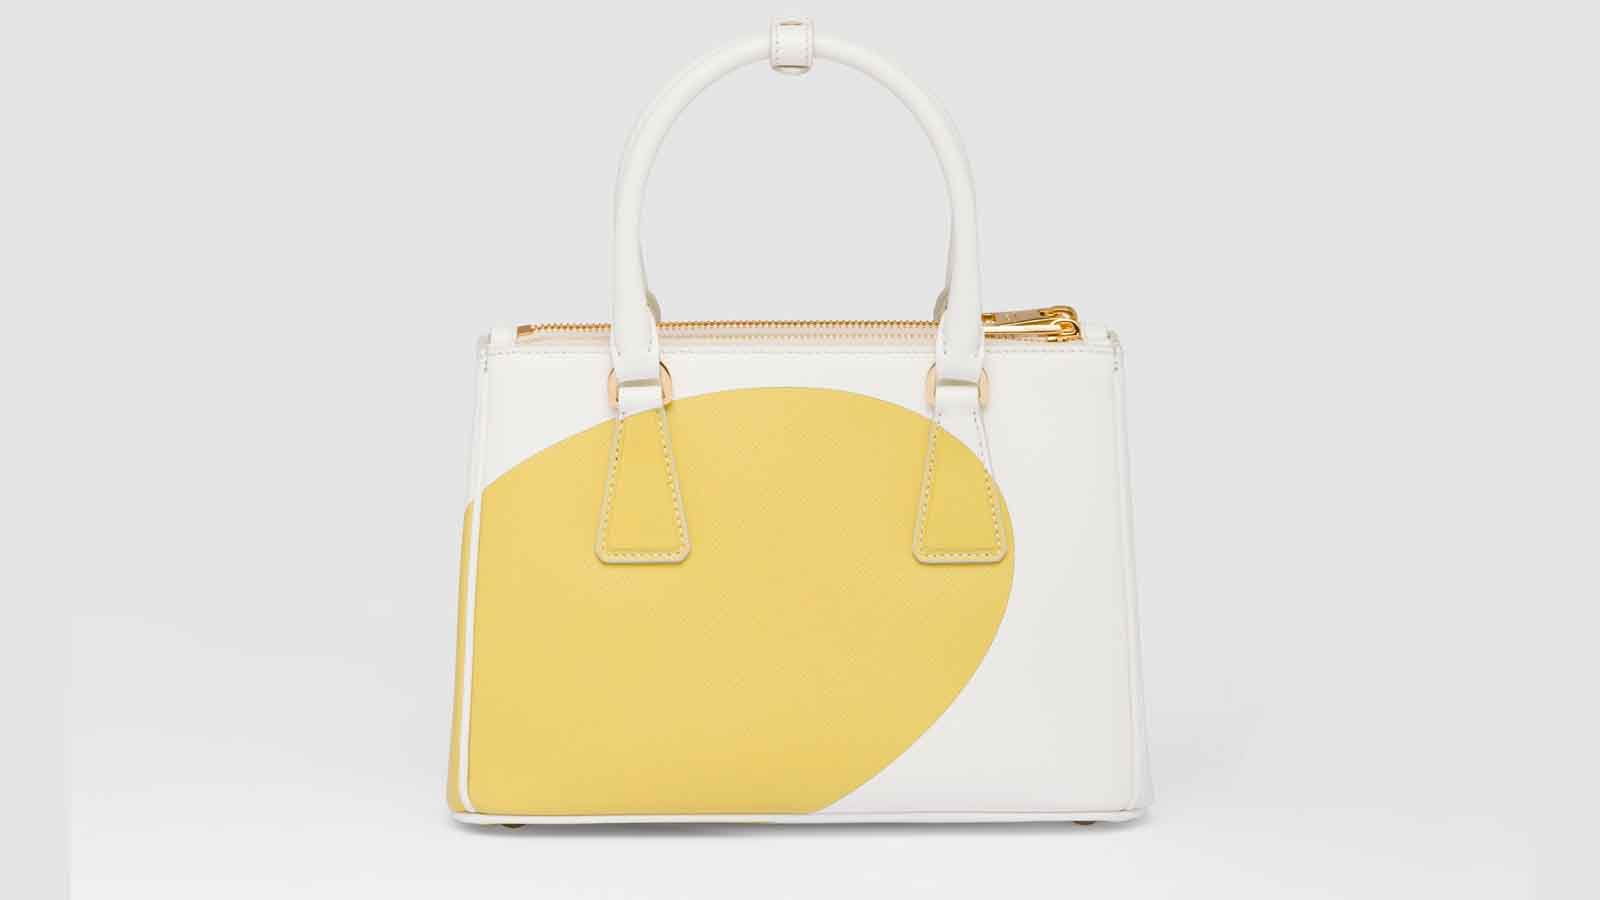   Designer Handbag: Gucci, Prada, or Chanel Bag + £10,000